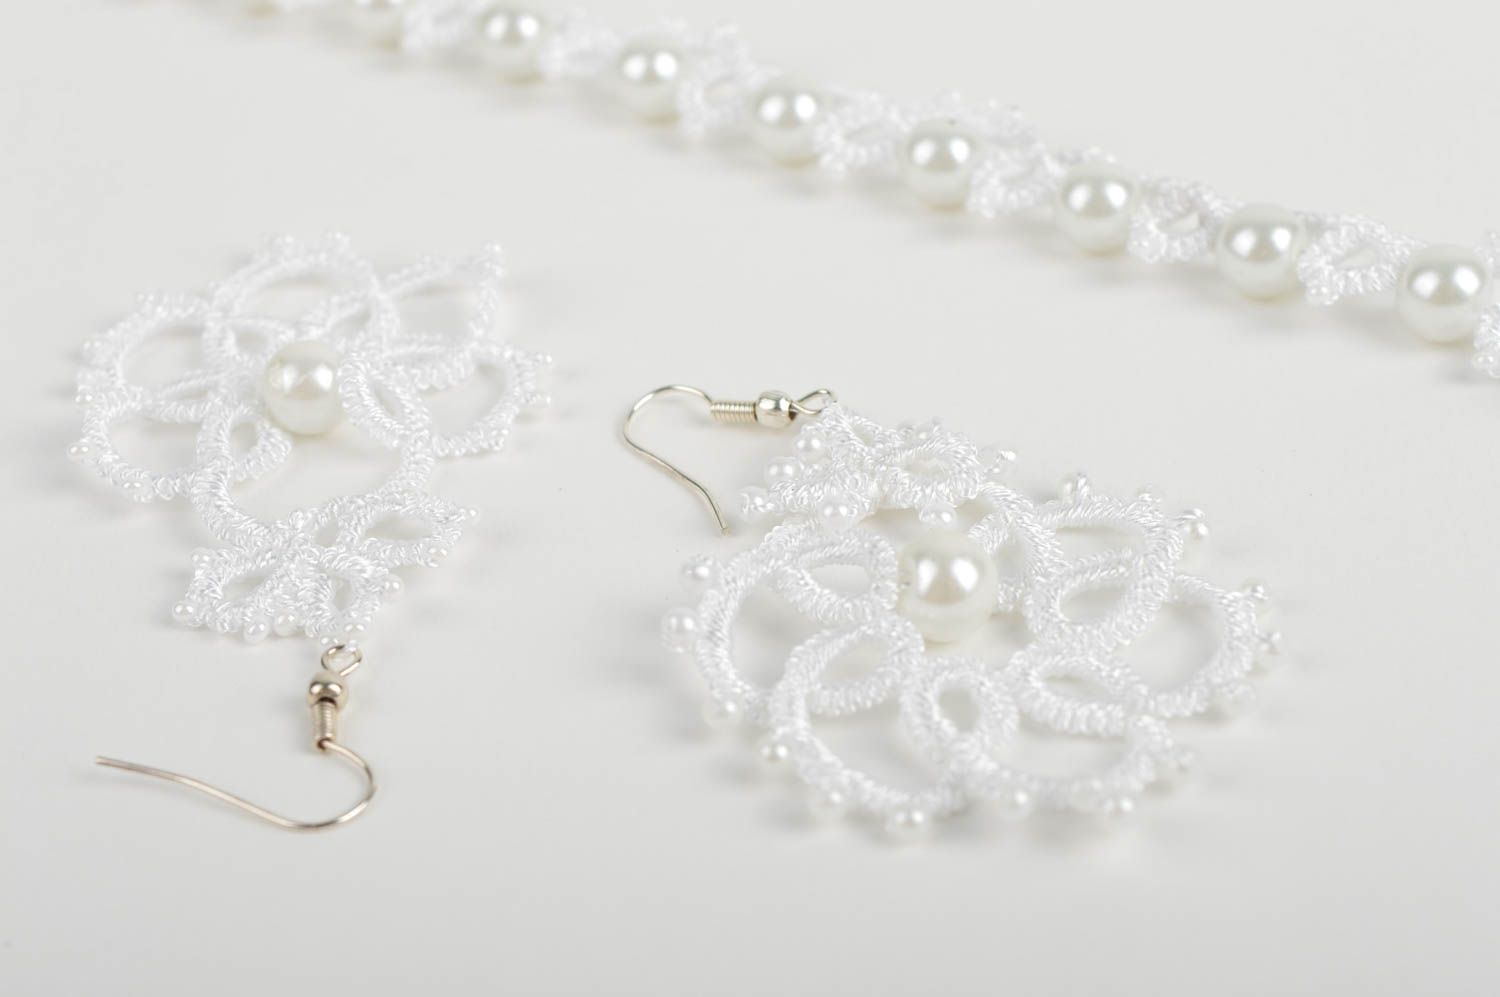 Beautiful handmade textile jewelry necklace and earrings tatting jewelry set photo 5